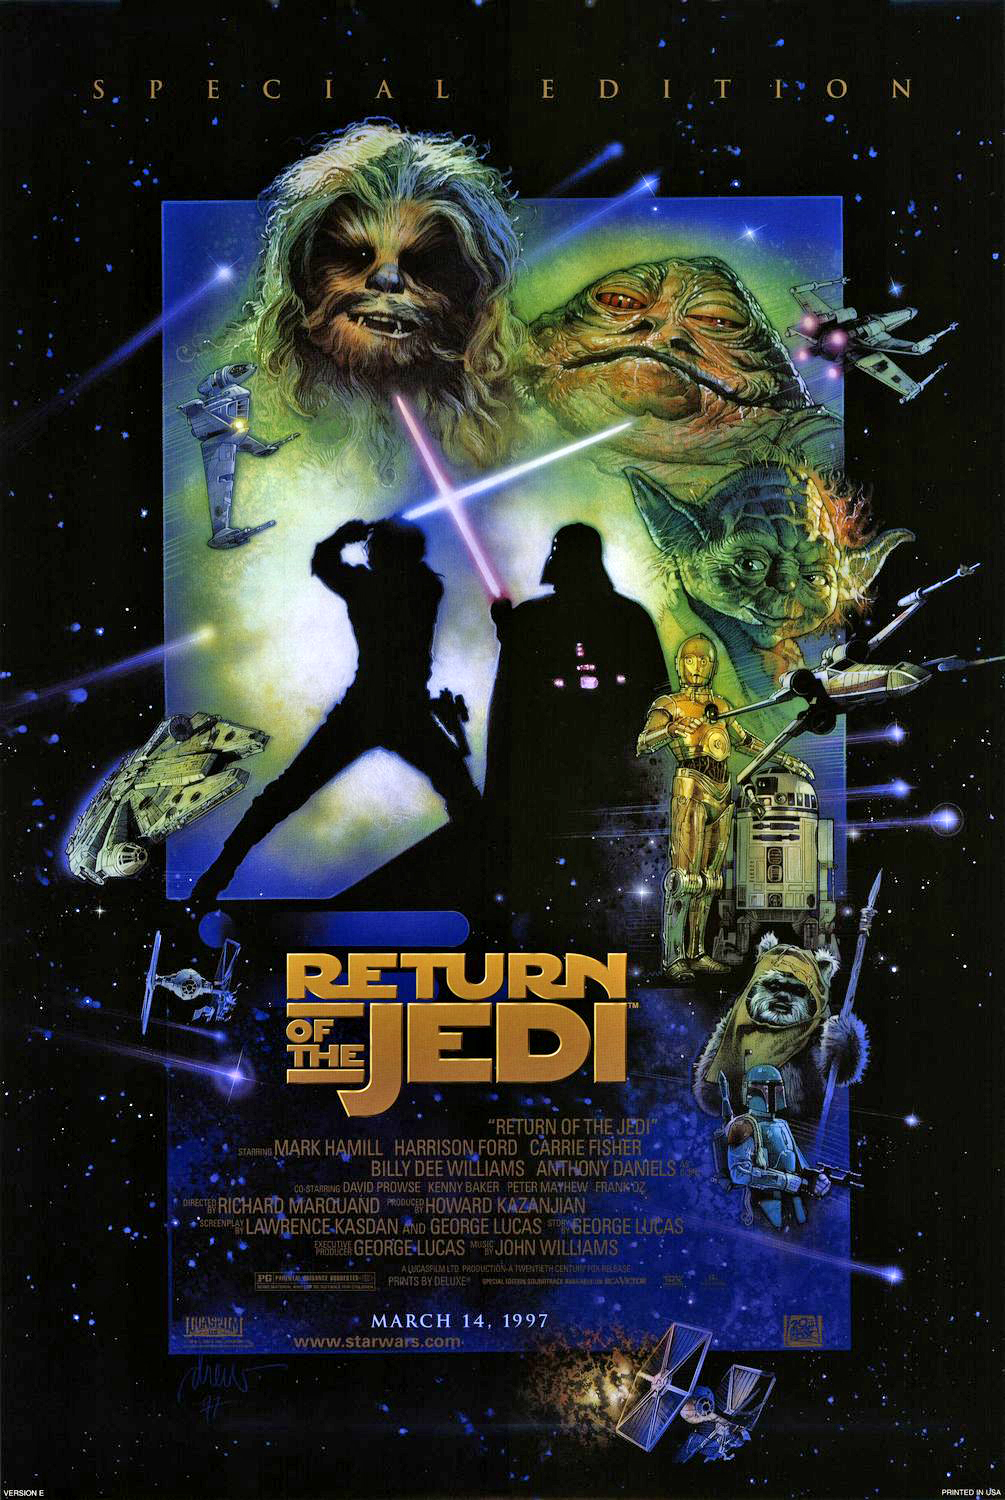 Star Wars Episode VI: Return Of The Jedi  HD wallpapers, Desktop wallpaper - most viewed